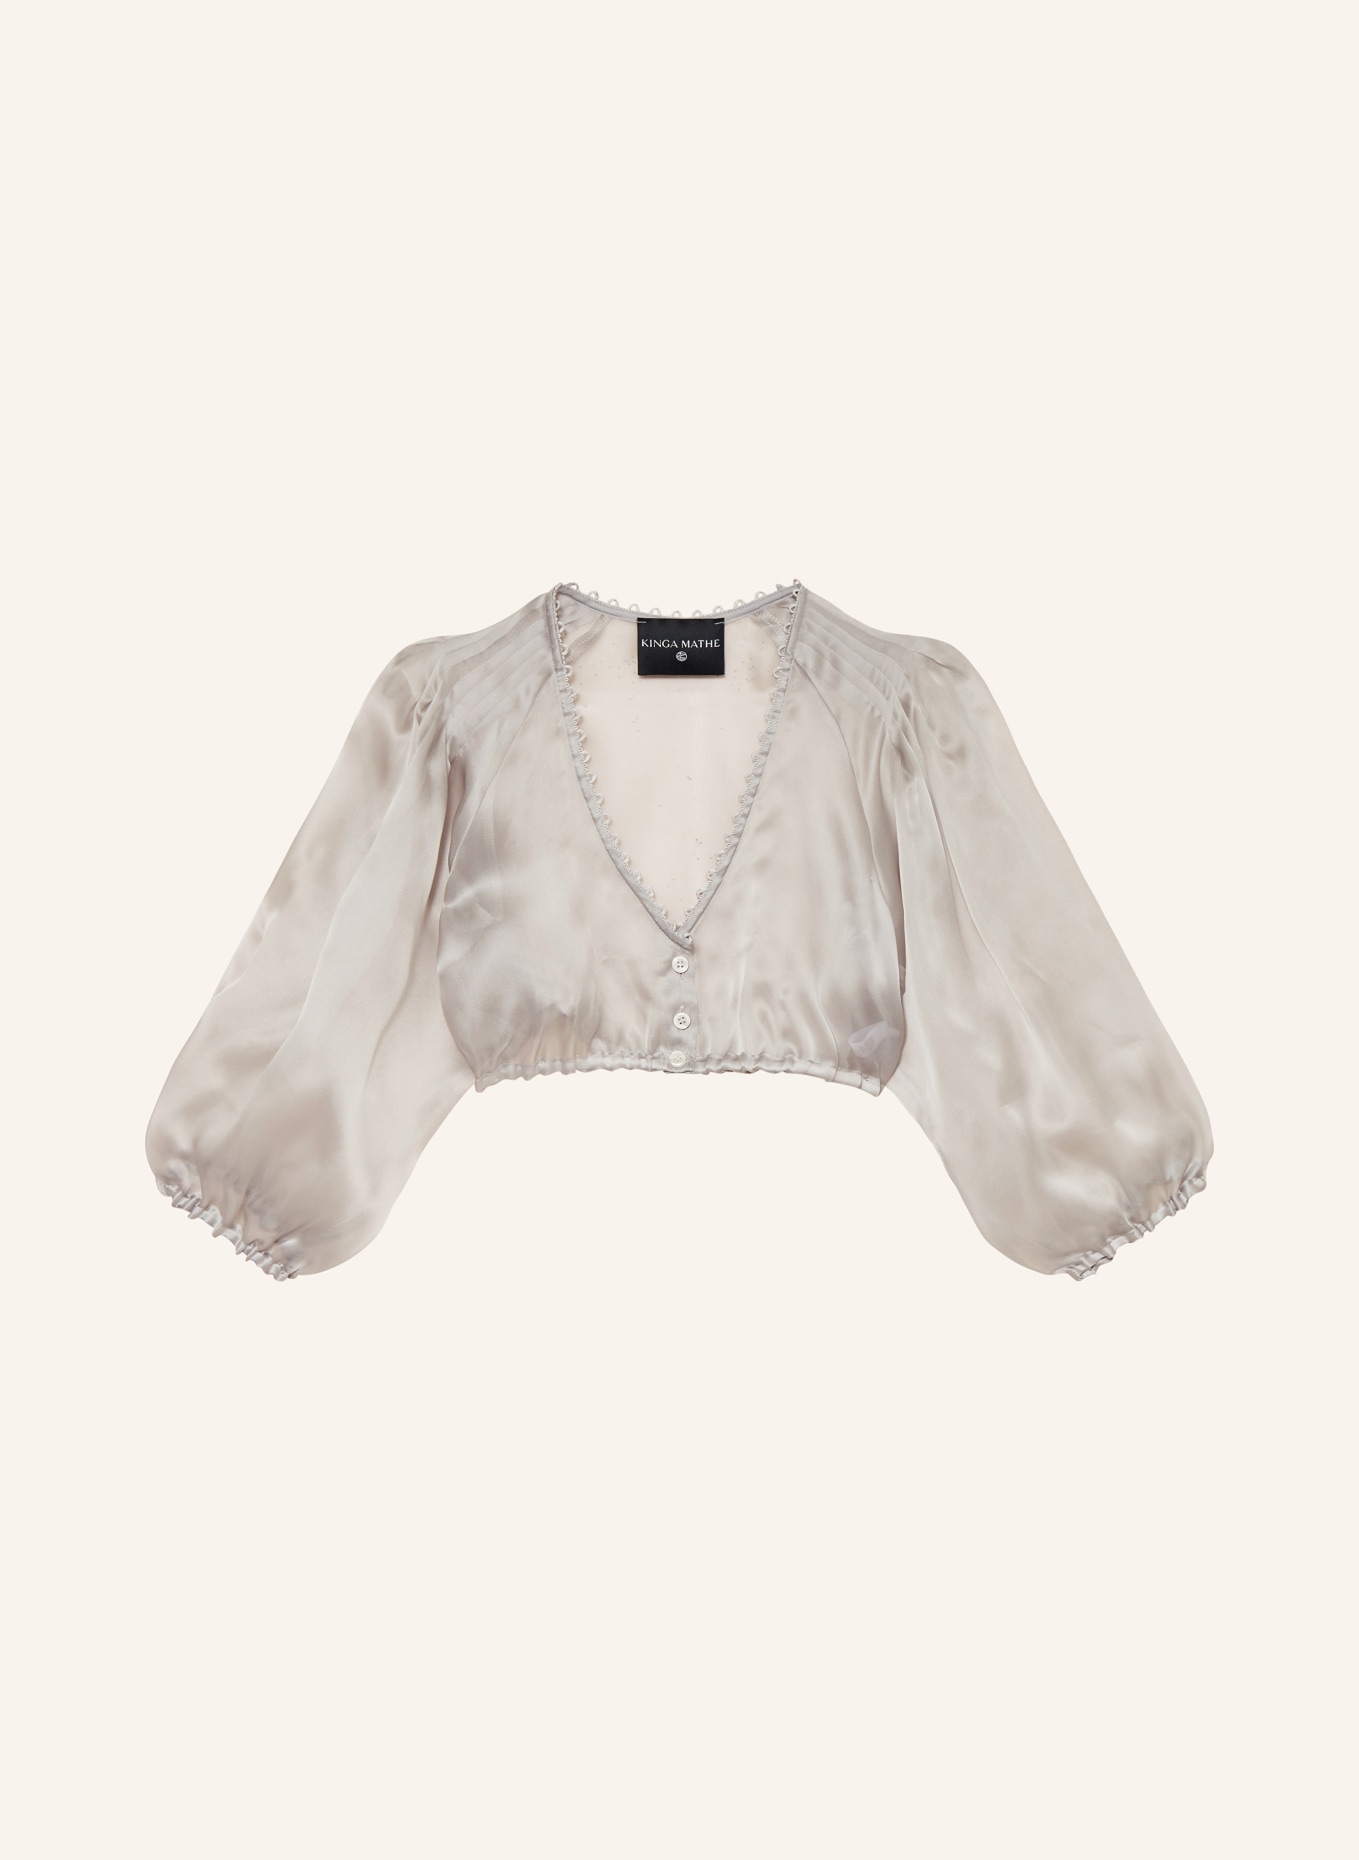 KINGA MATHE Dirndl blouse KAIRA made of silk, Color: LIGHT GRAY (Image 1)